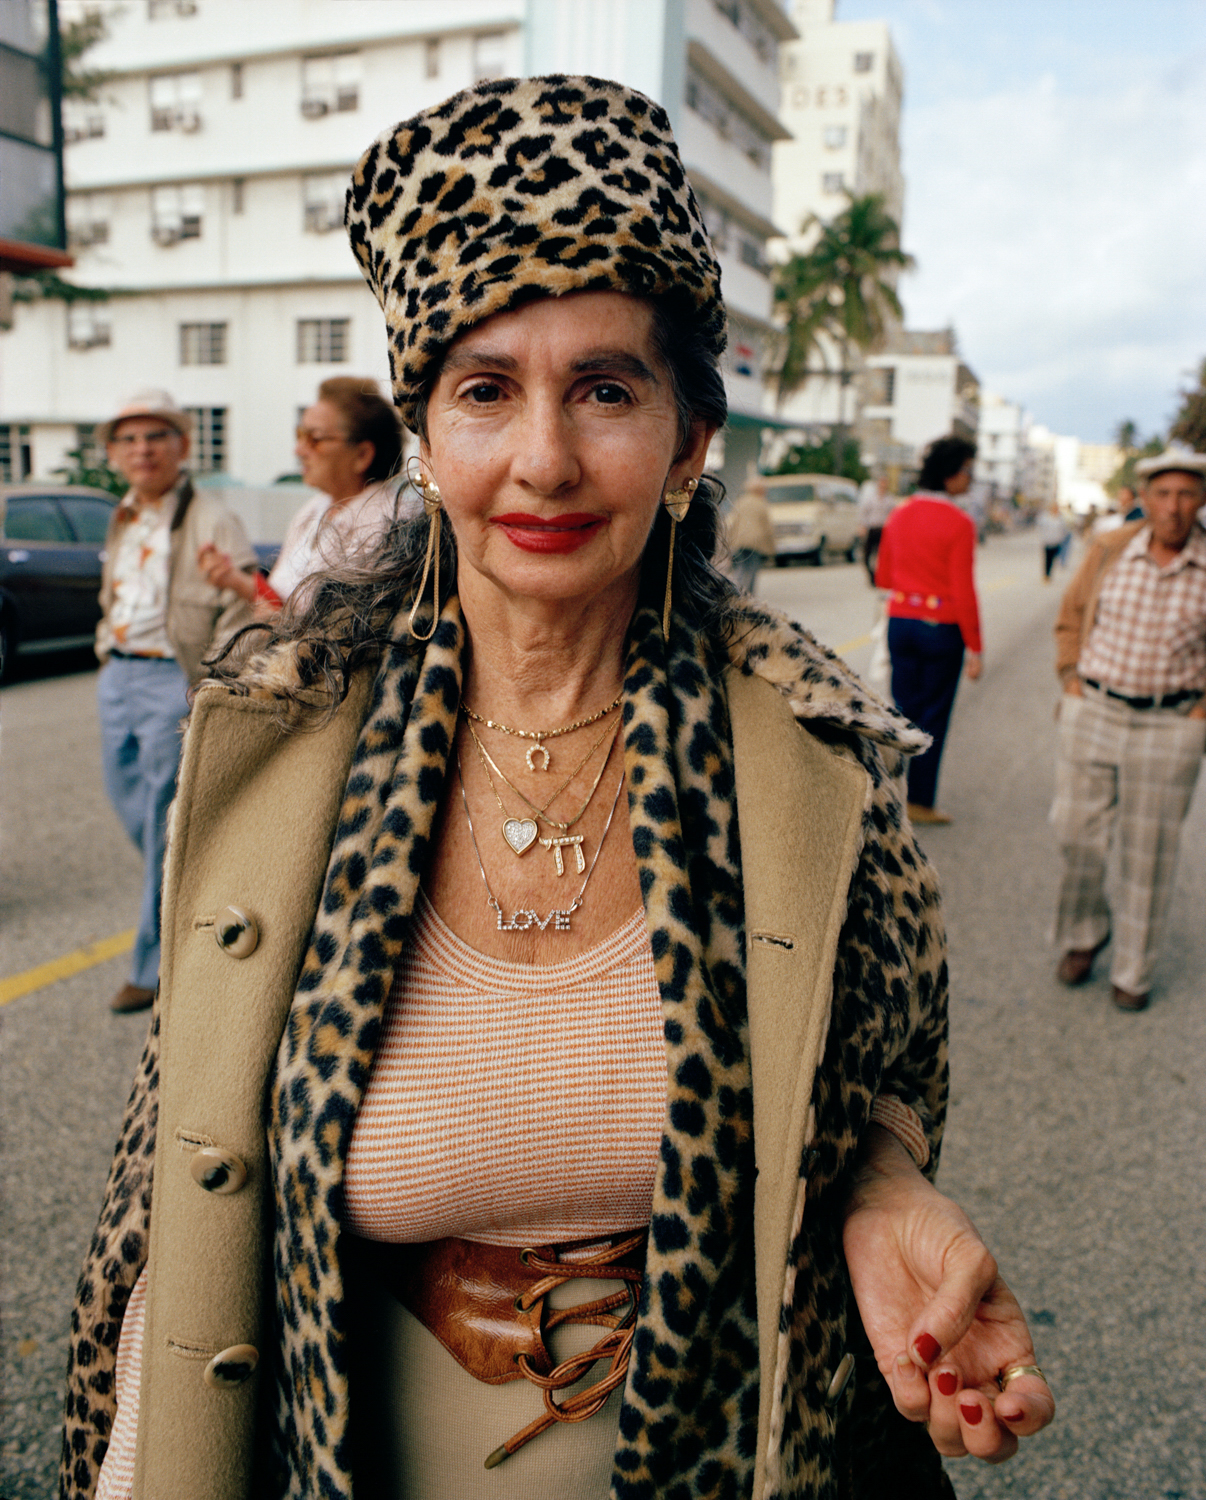   Woman on the street, South Beach, 1981  